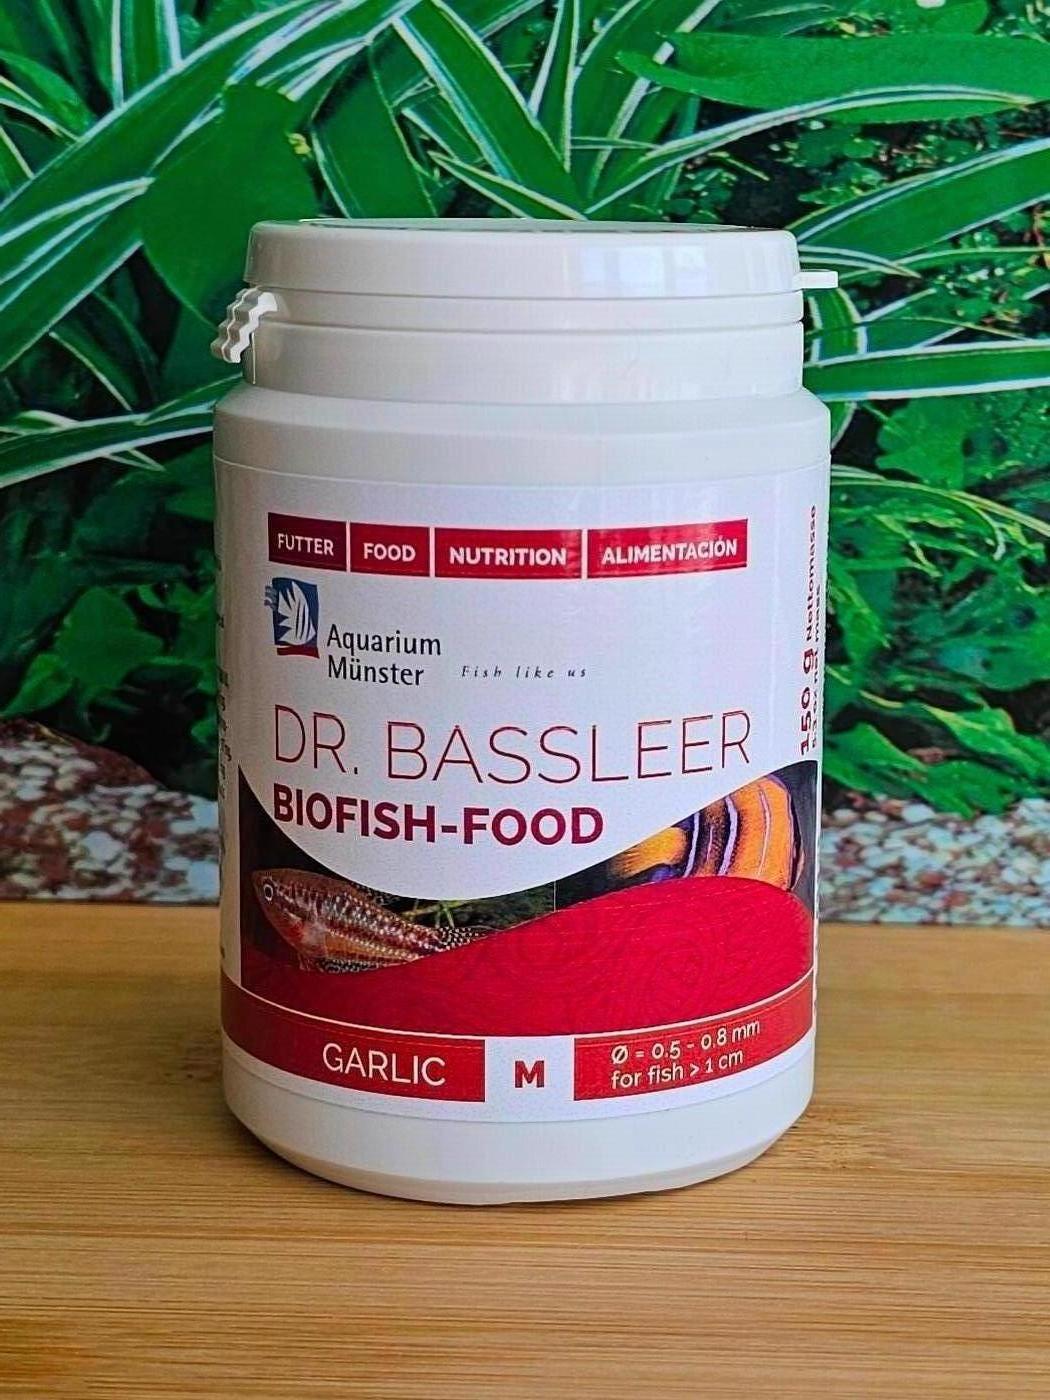 Dr. Bassleer Biofish-Food GARLIC  60g-68g